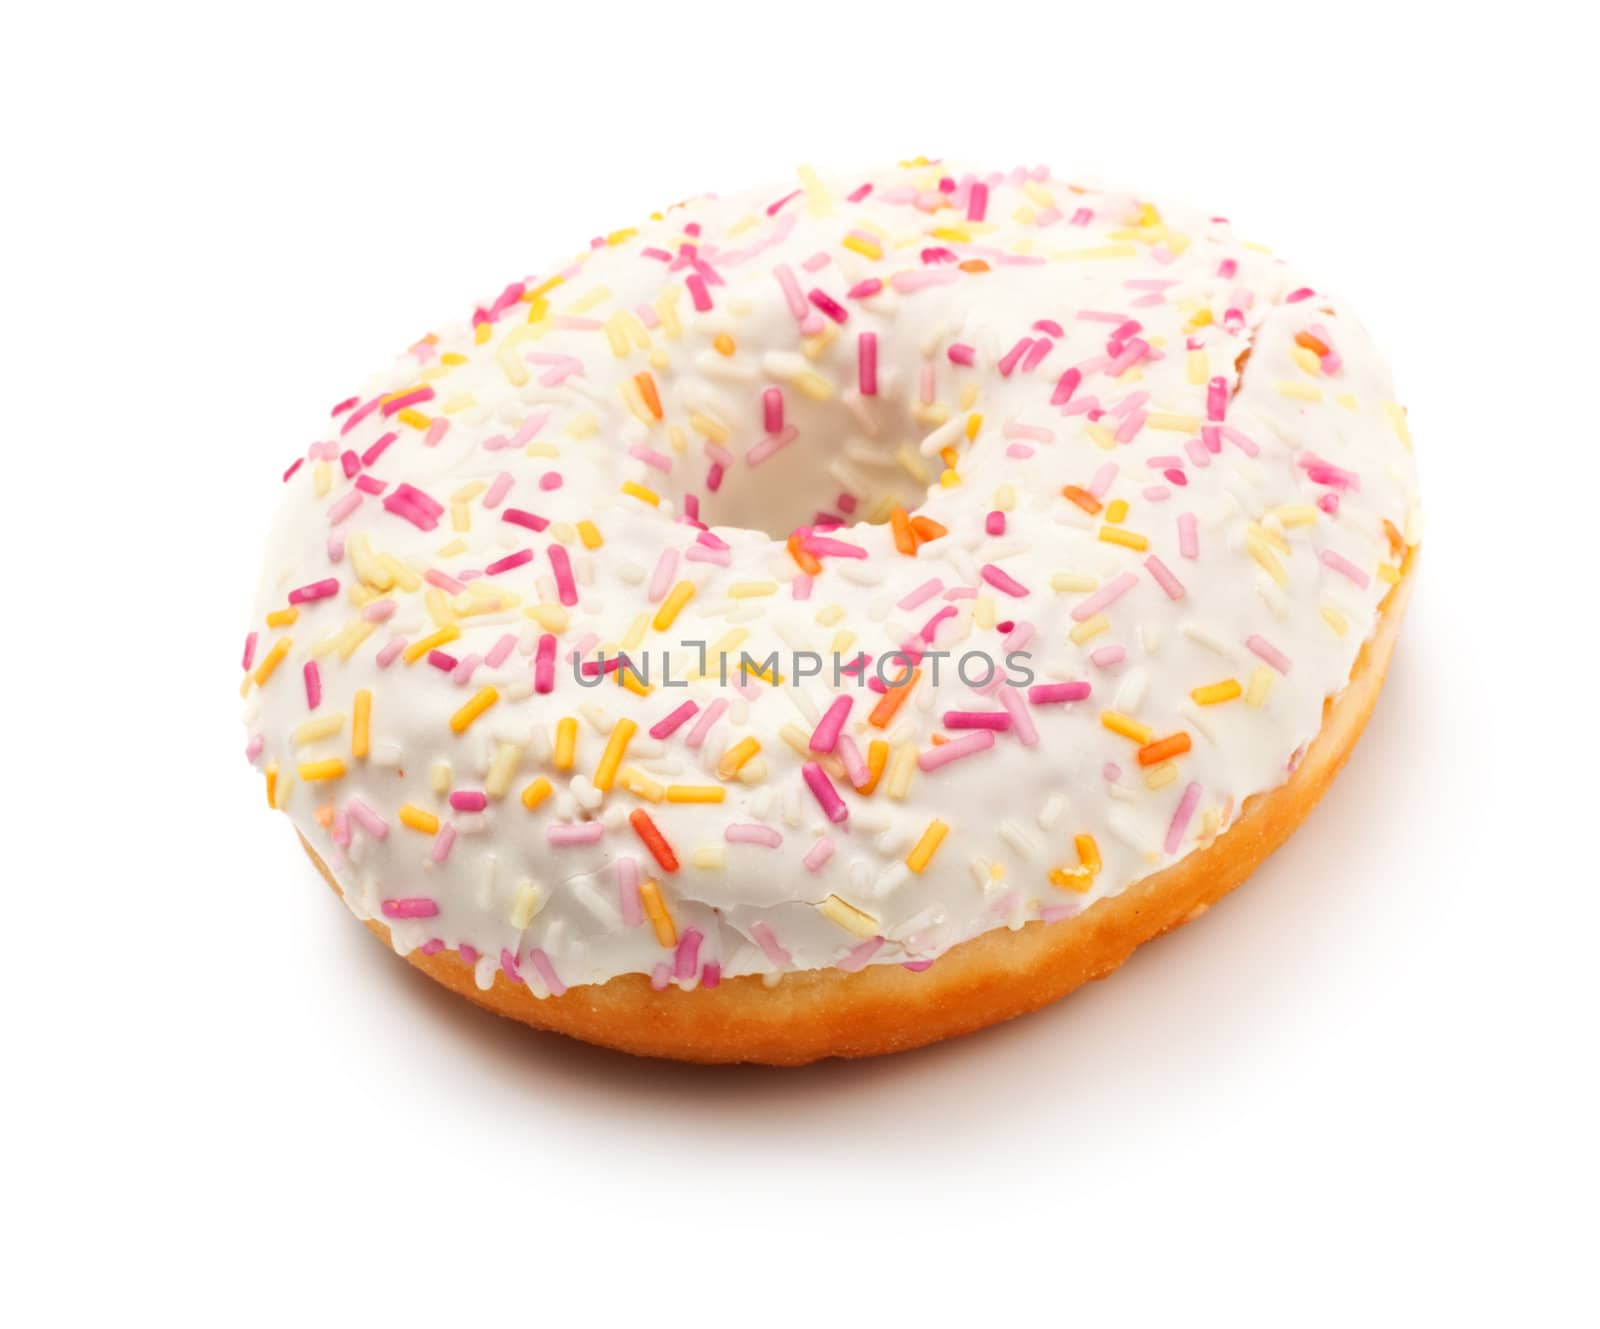 sugar glazed donut covered in sprinkles isolated on white